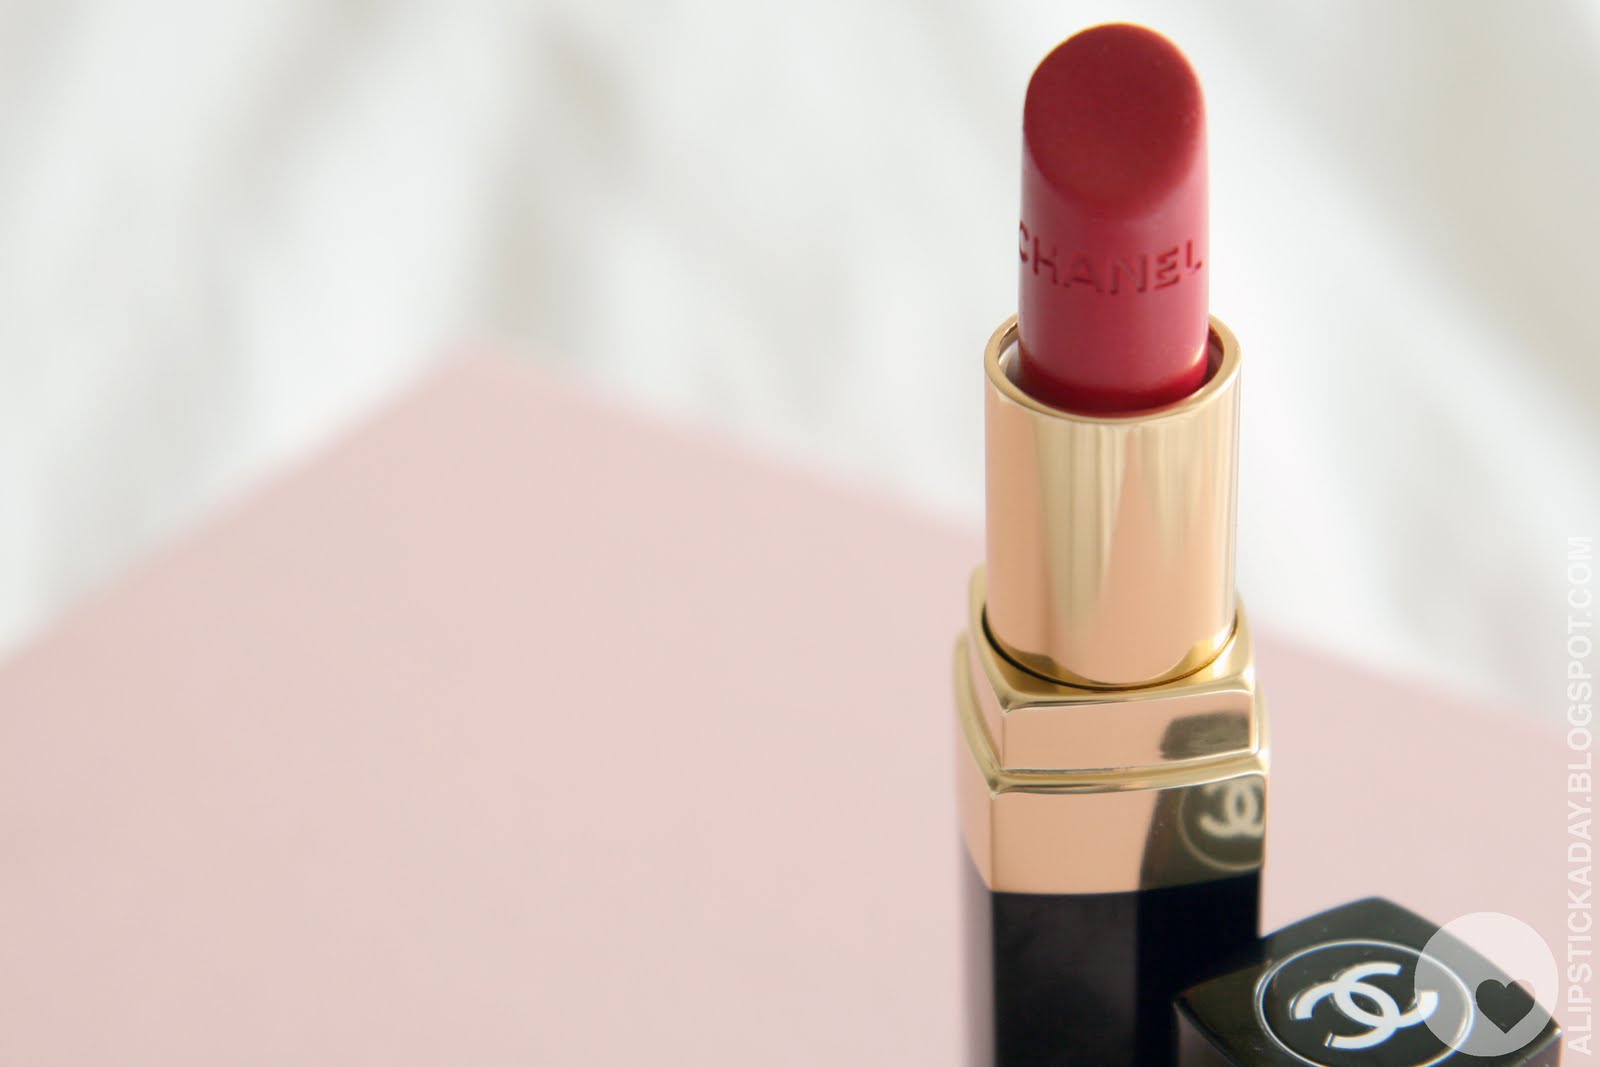 Chanel Rouge Coco Lipstick in Cambon 31